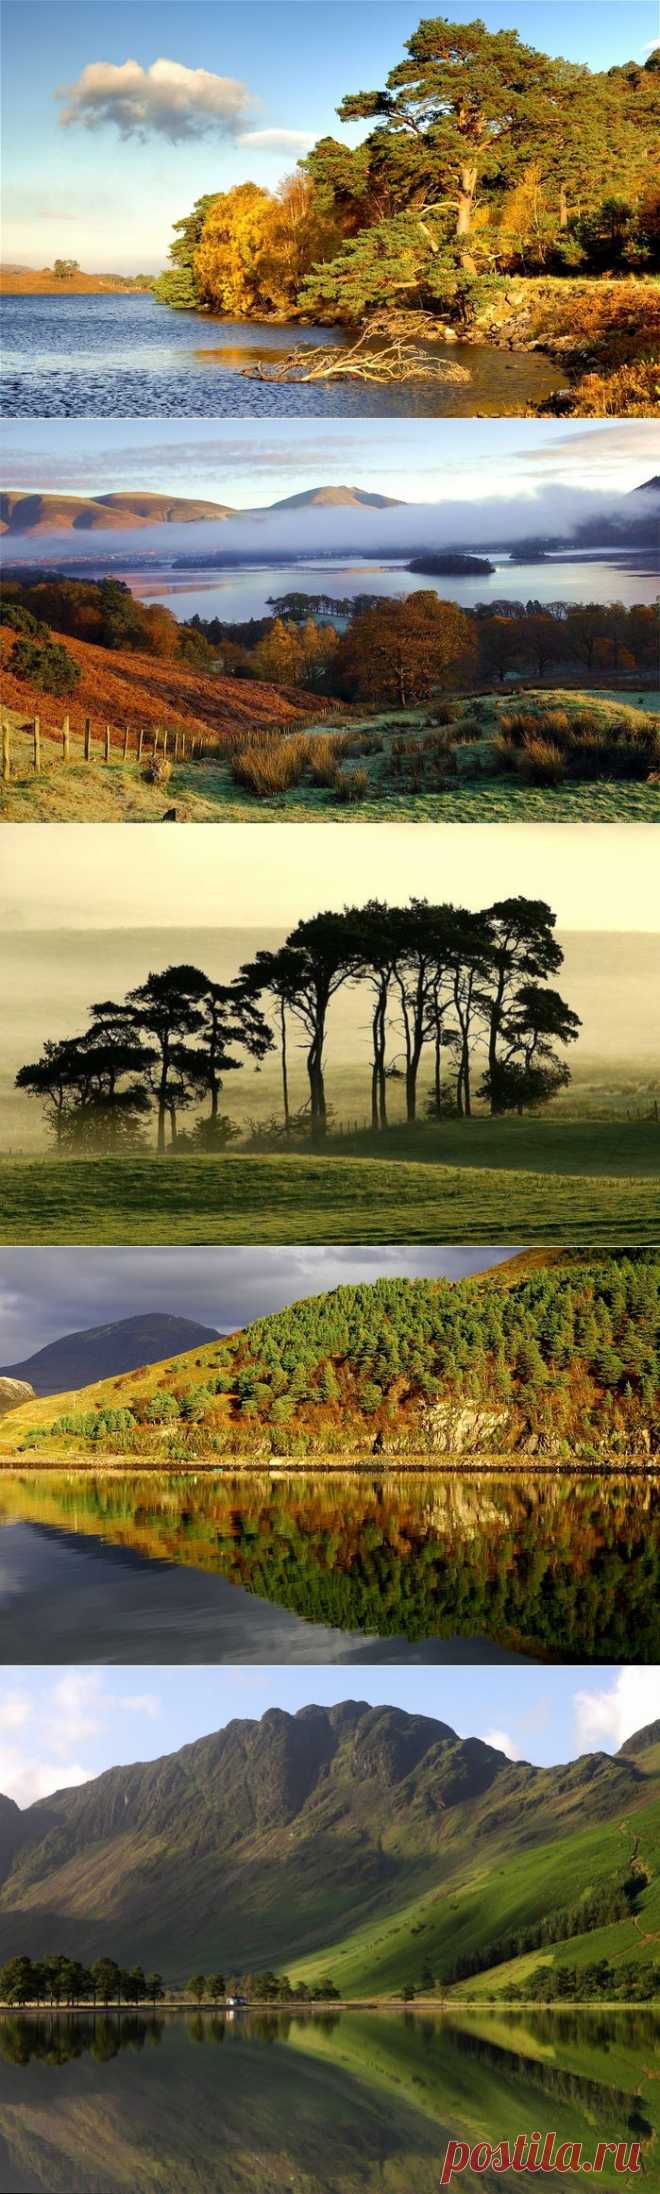 Шотландия - фотографии Хайлэндз.